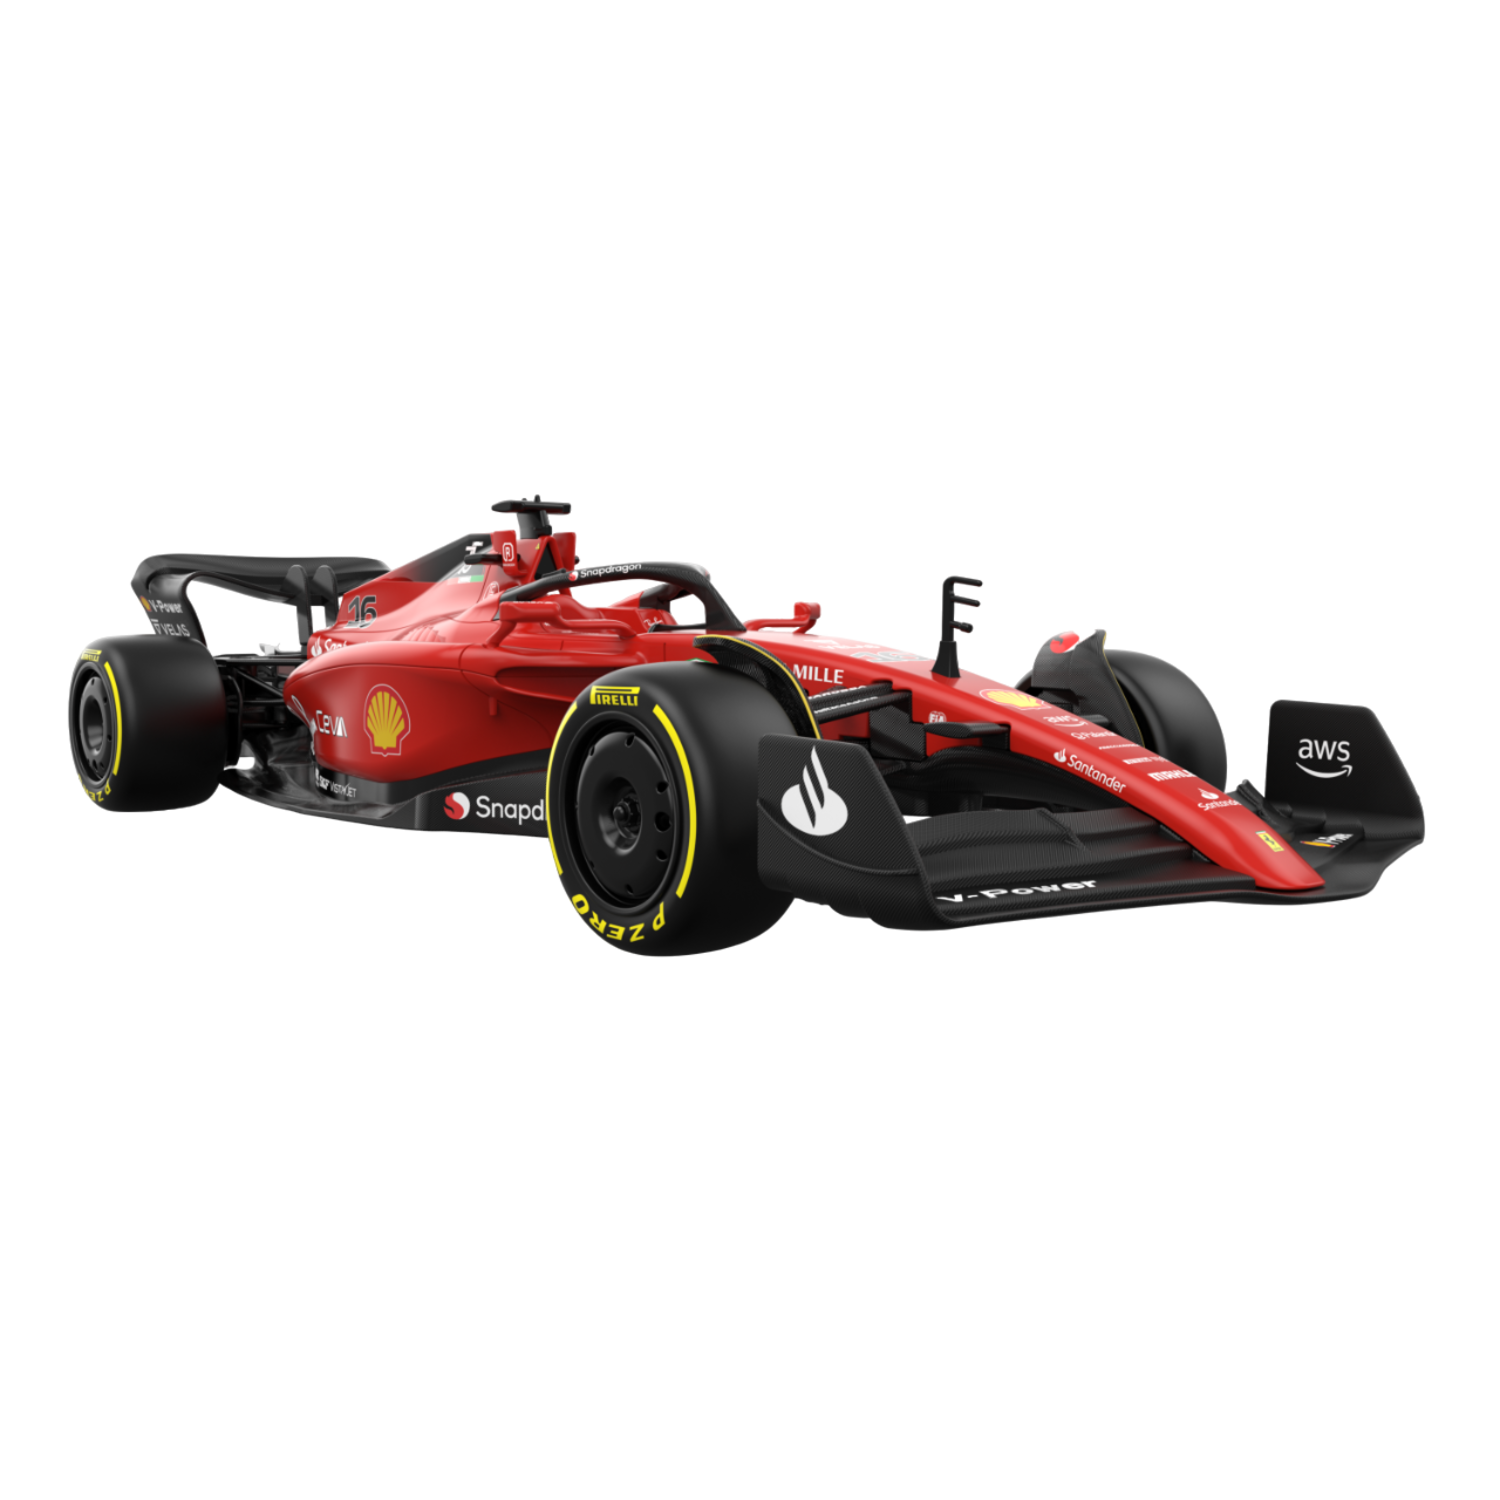 Pirox Toys Rc 1:12 Ferrari F1 75